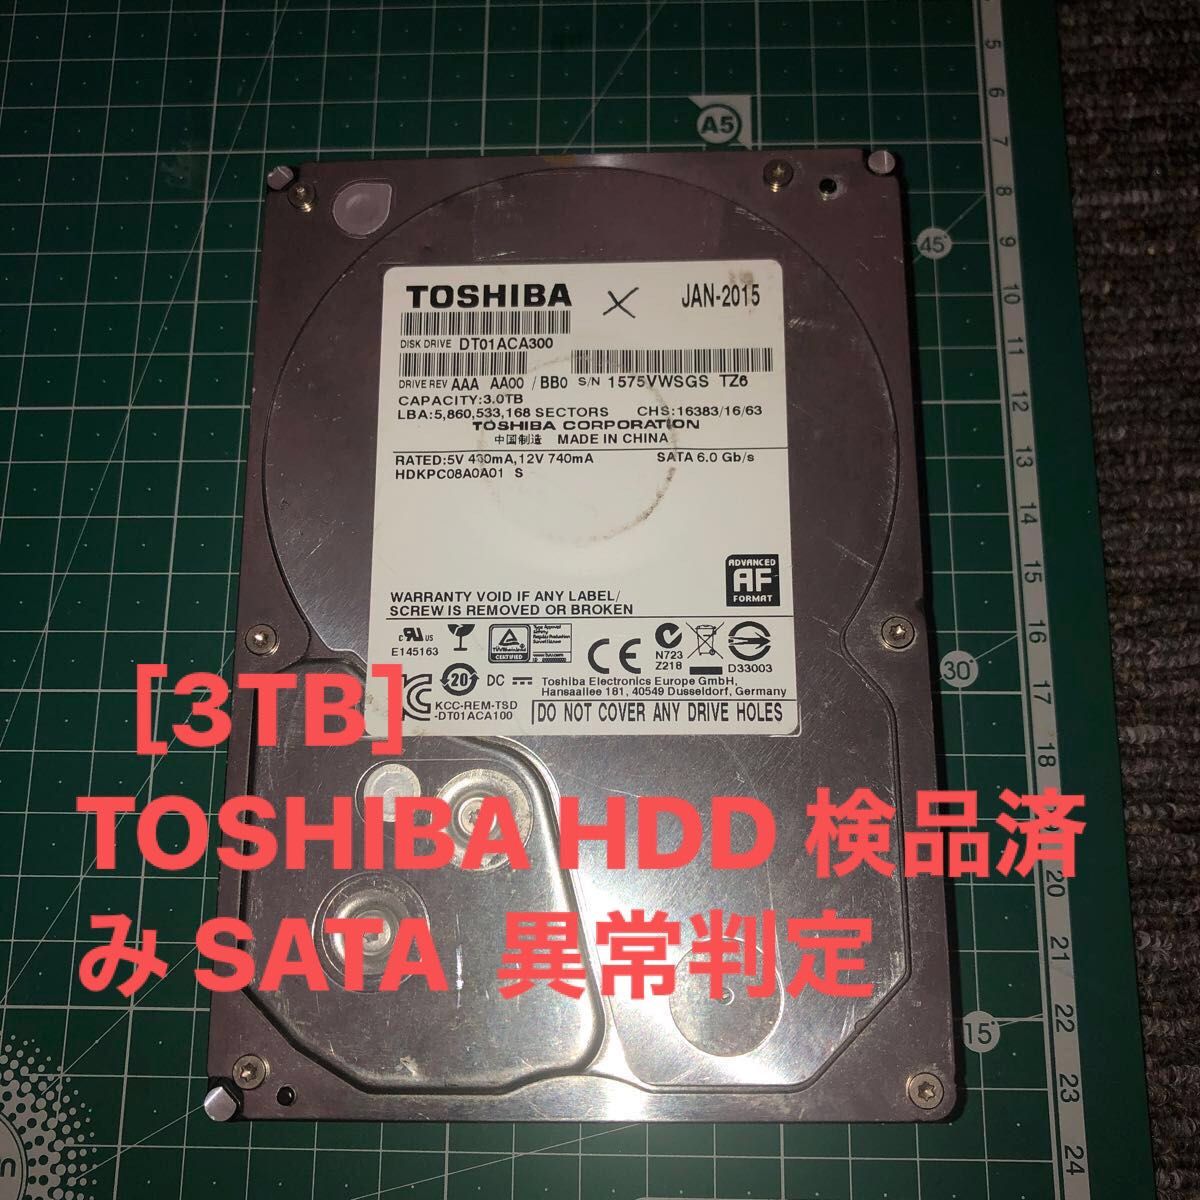 DT01ACA300 ［3TB］ TOSHIBA HDD 検品済み SATA  異常判定 